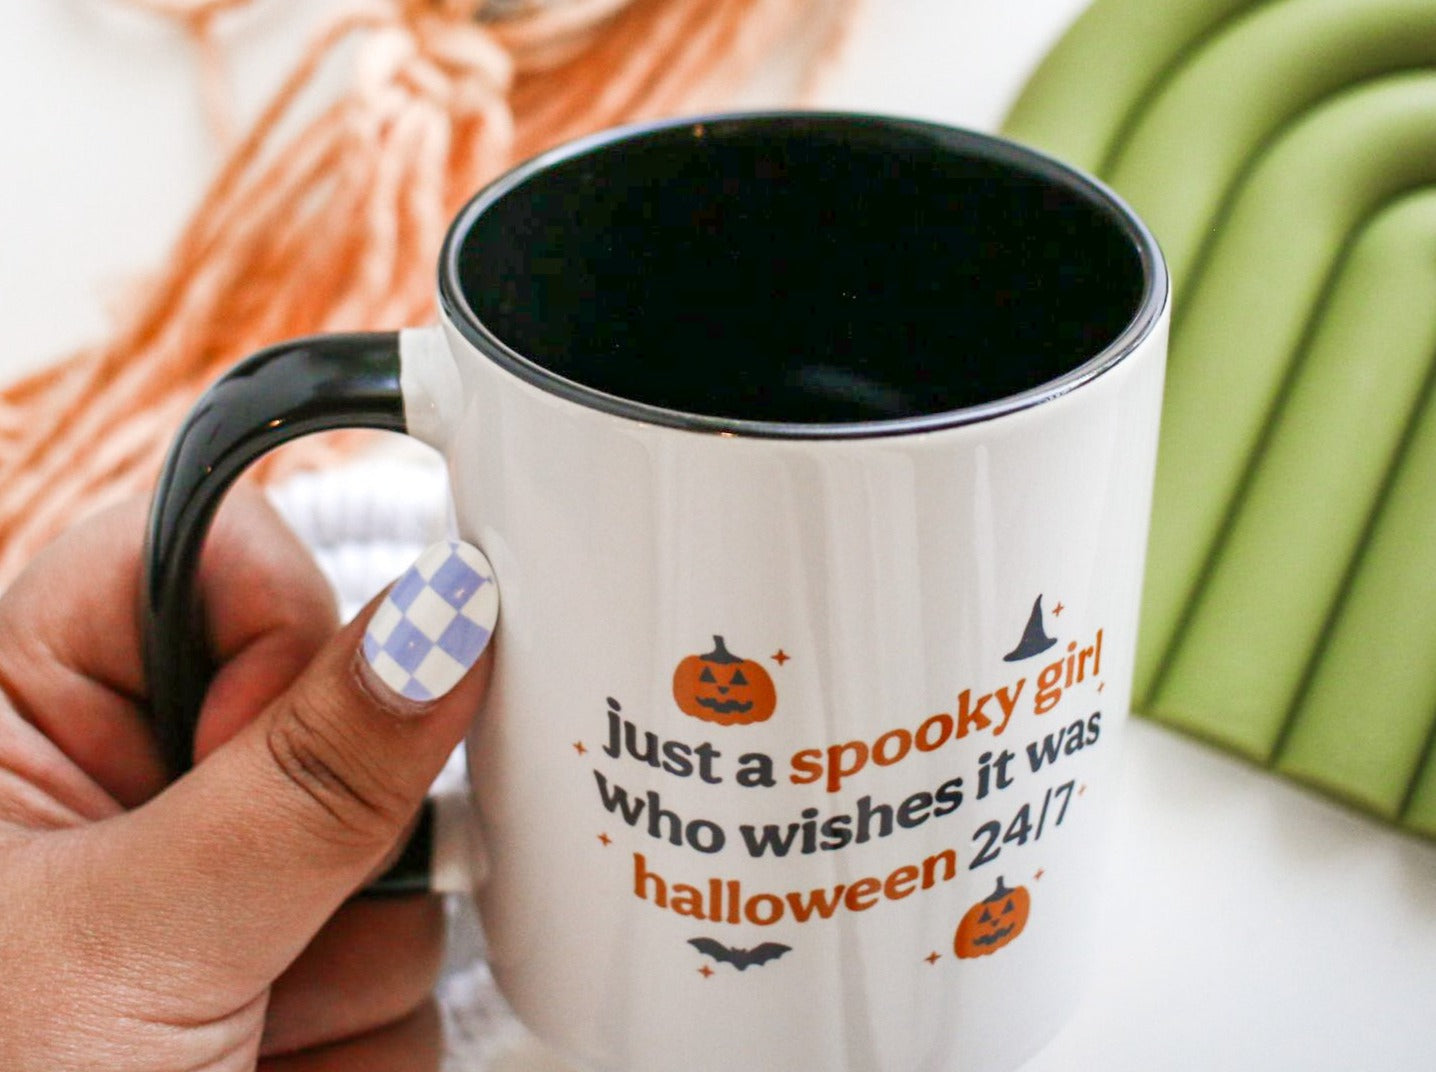 Spooky Girl 24/7 Mug